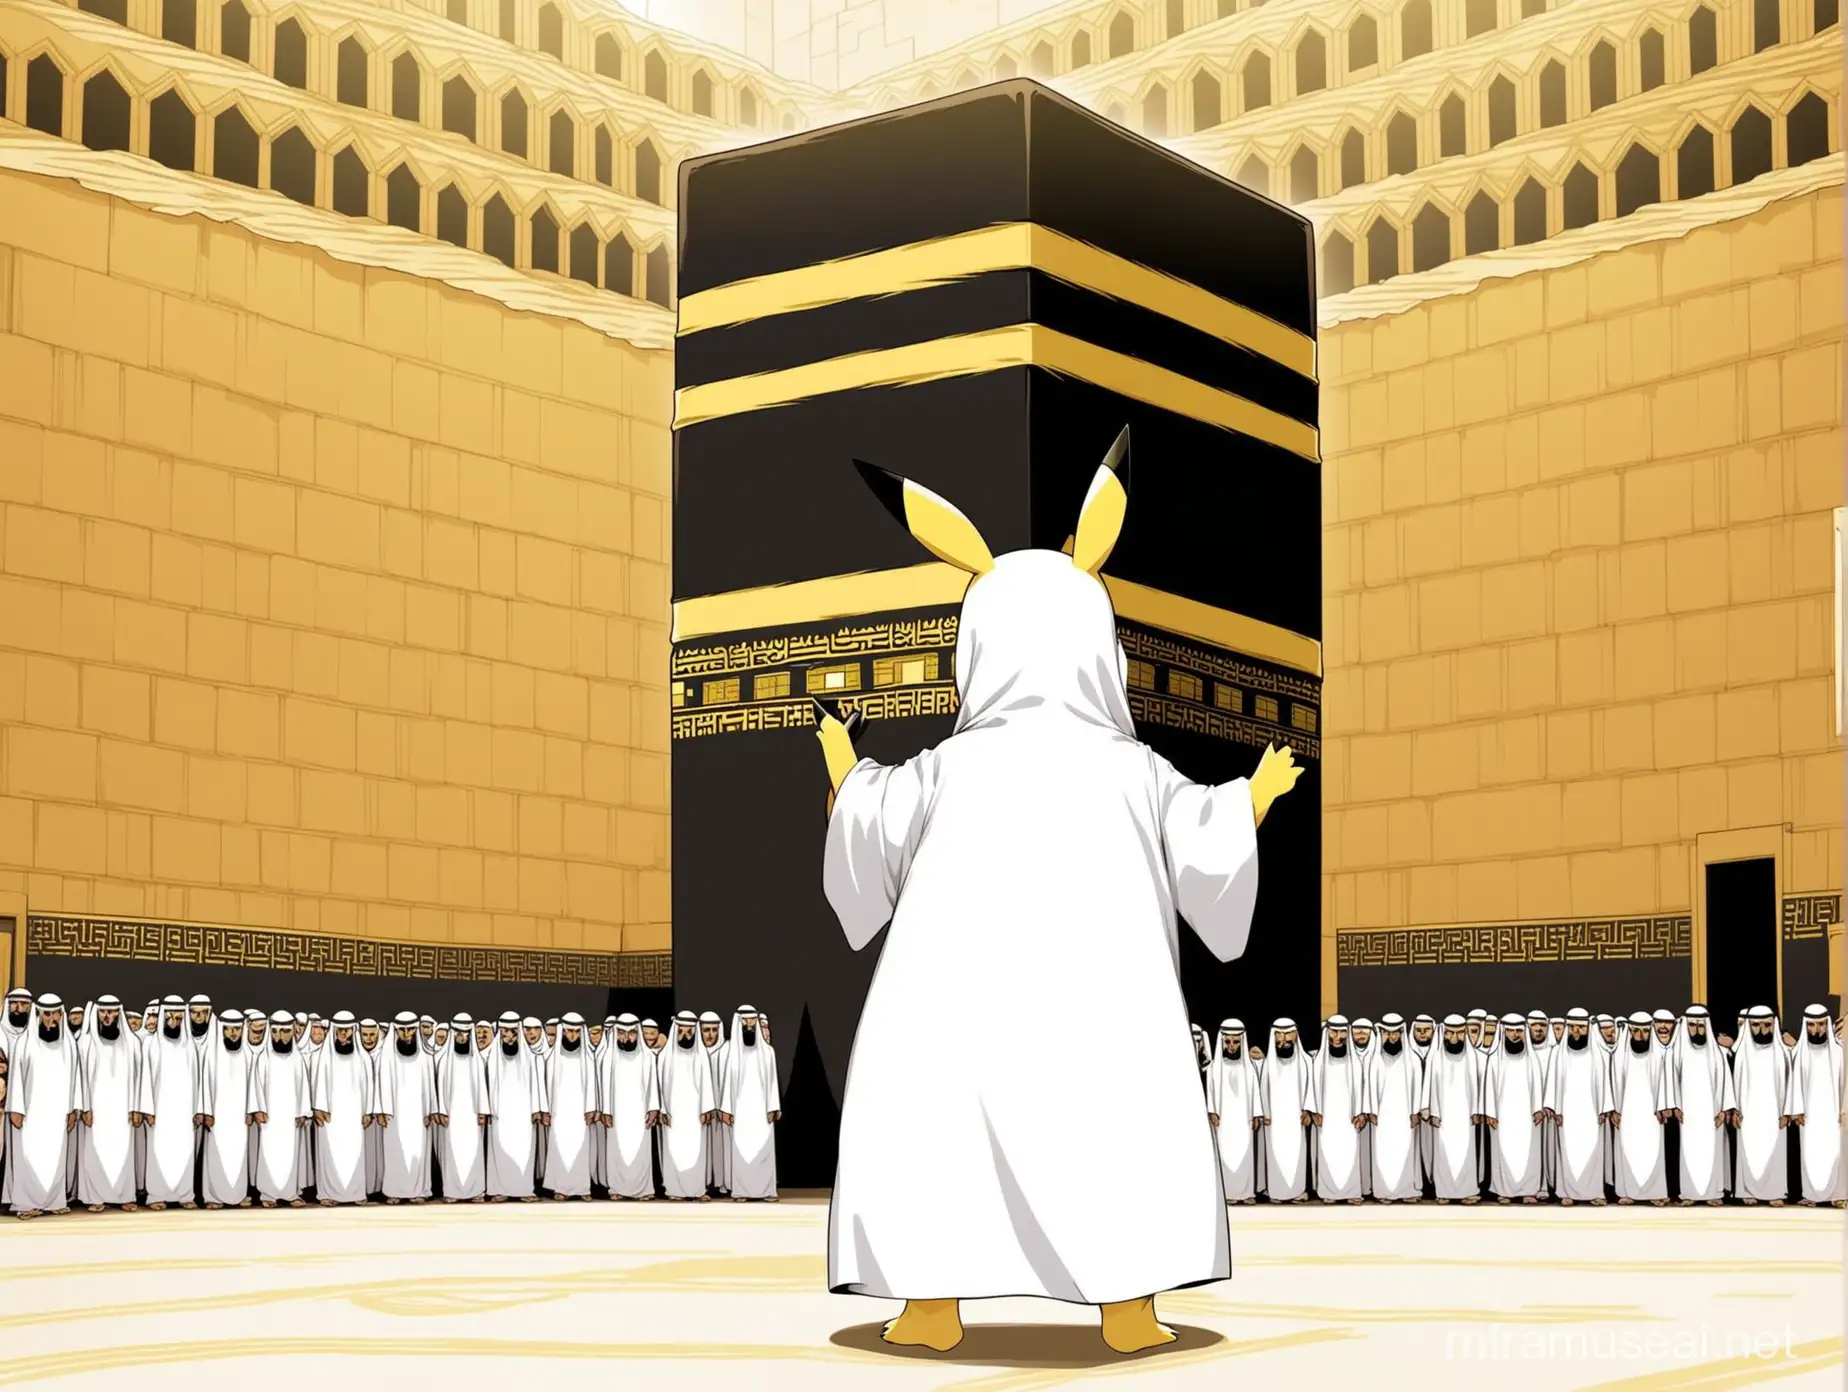 Pikachu wearing ihram circumambulates the Kaaba